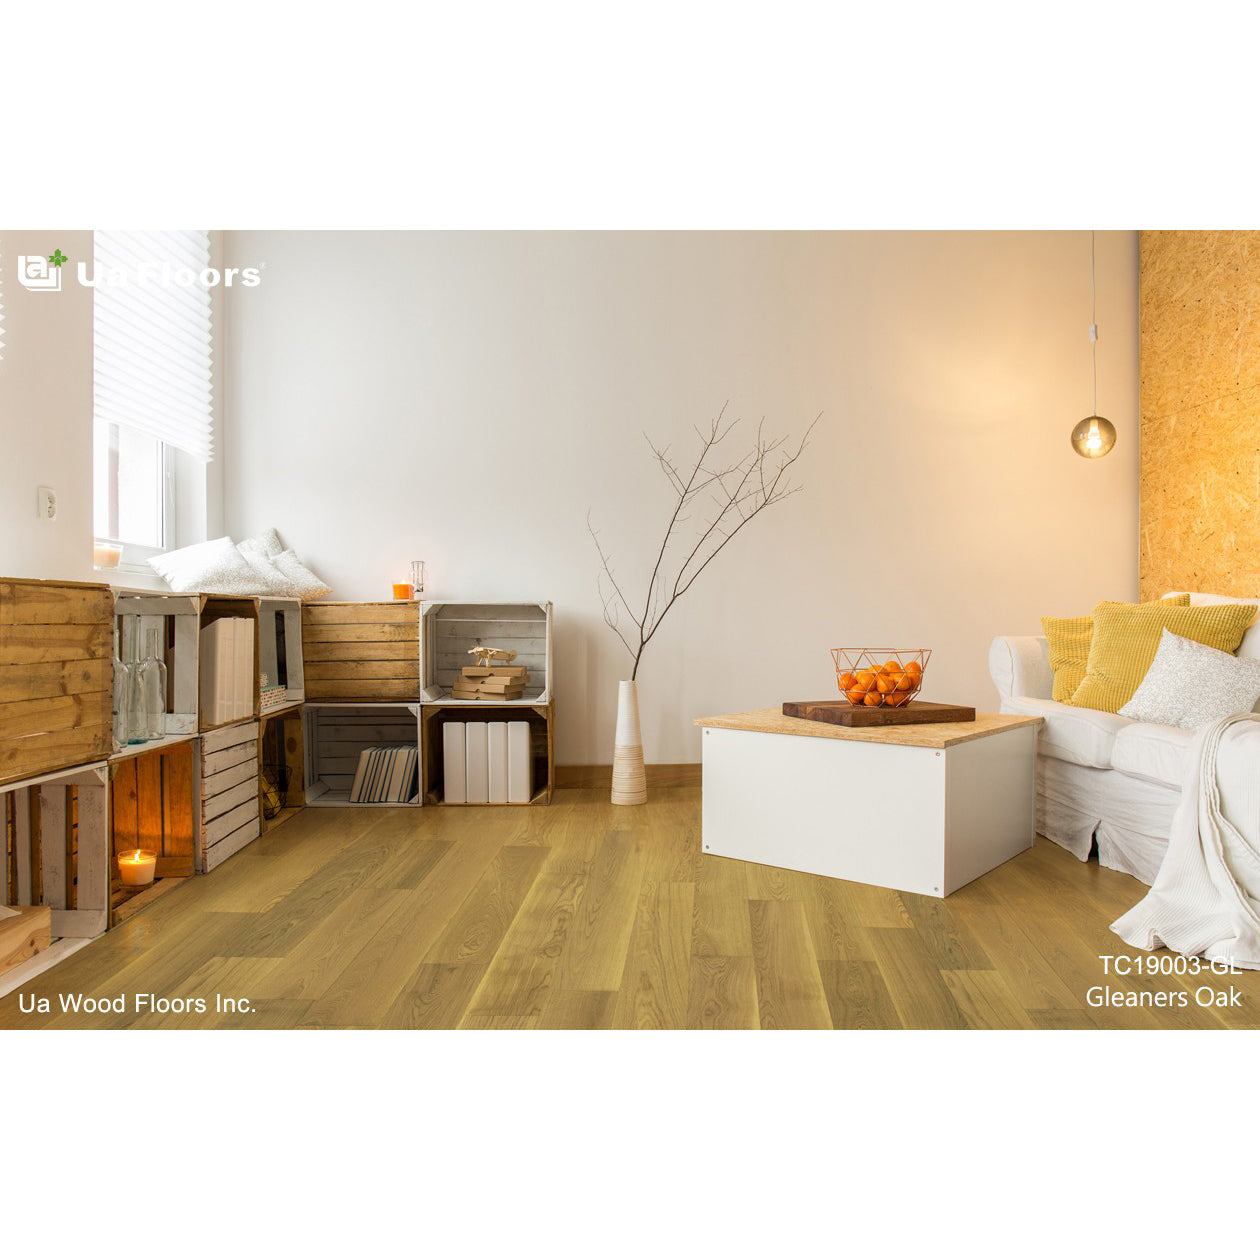 Ua Floors - Classics Collection - Gleaners Euro Oak